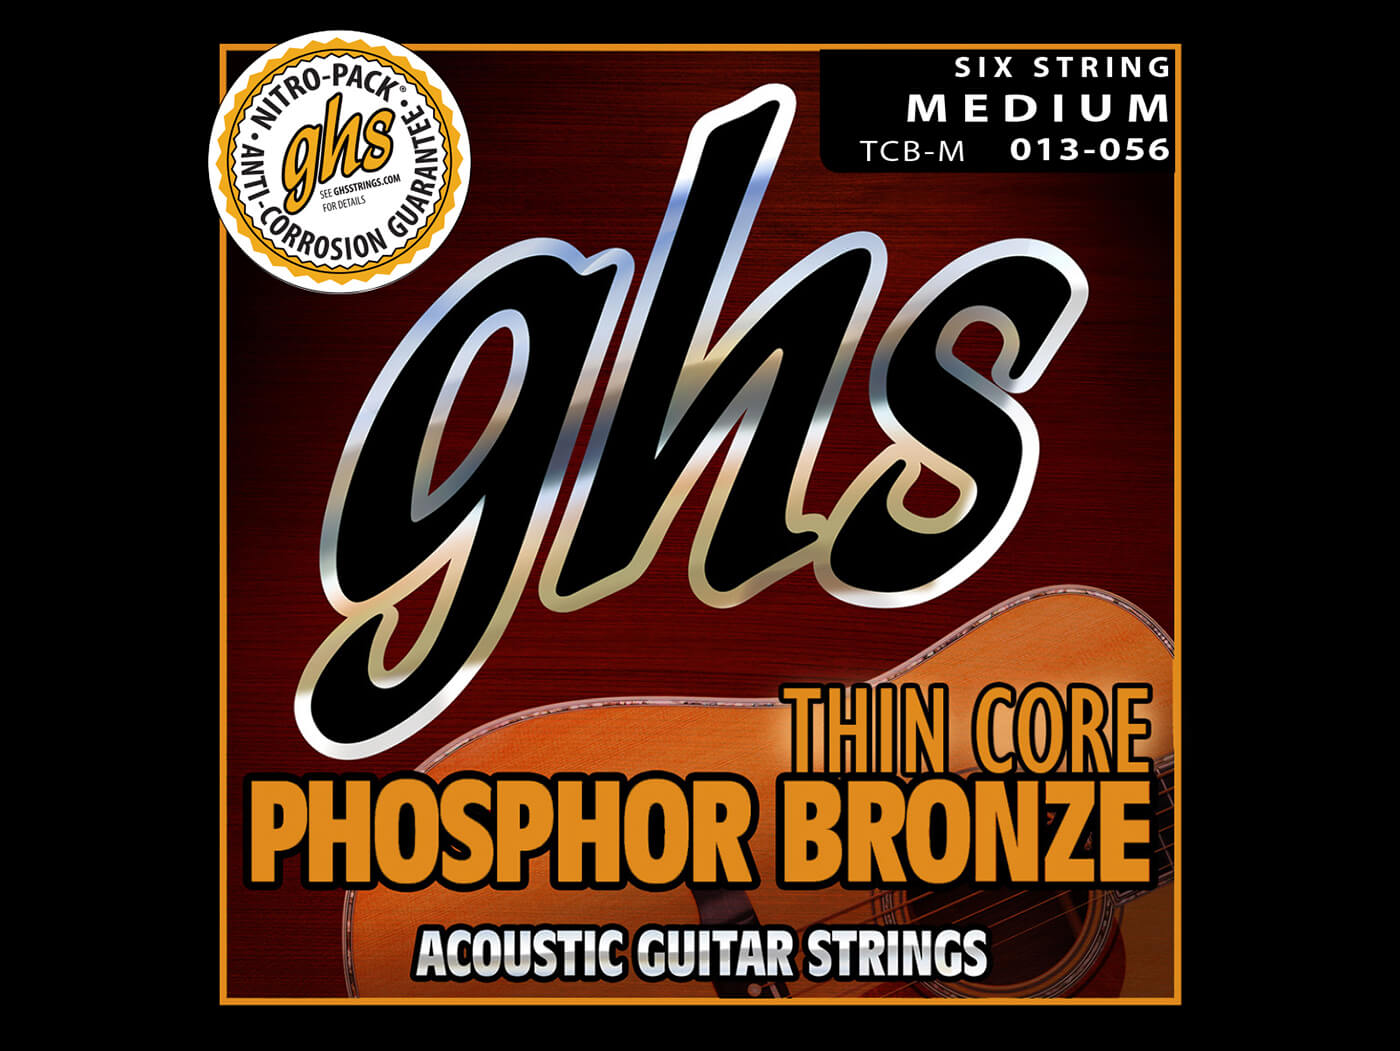 GHS Thin Core Phosphor Bronze acoustic strings